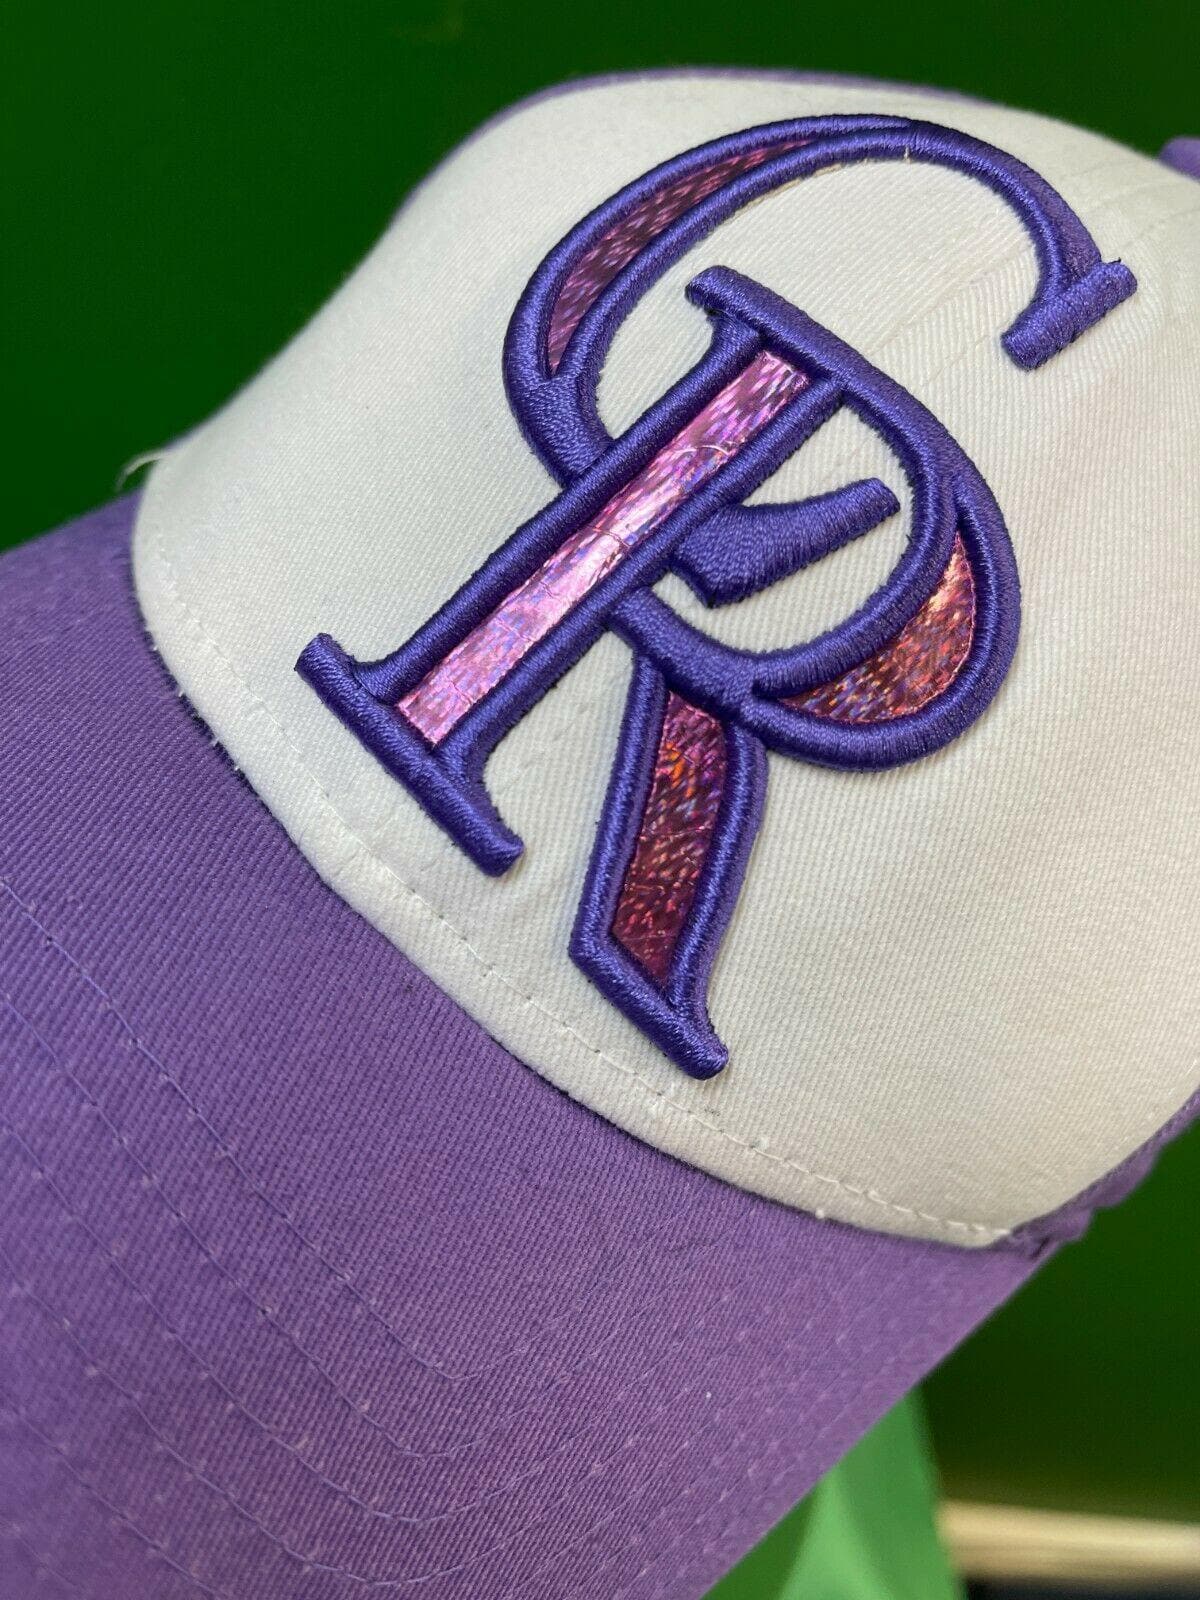 MLB Colorado Rockies New Era 9FORTY Hat Cap Purple Women's OSFA